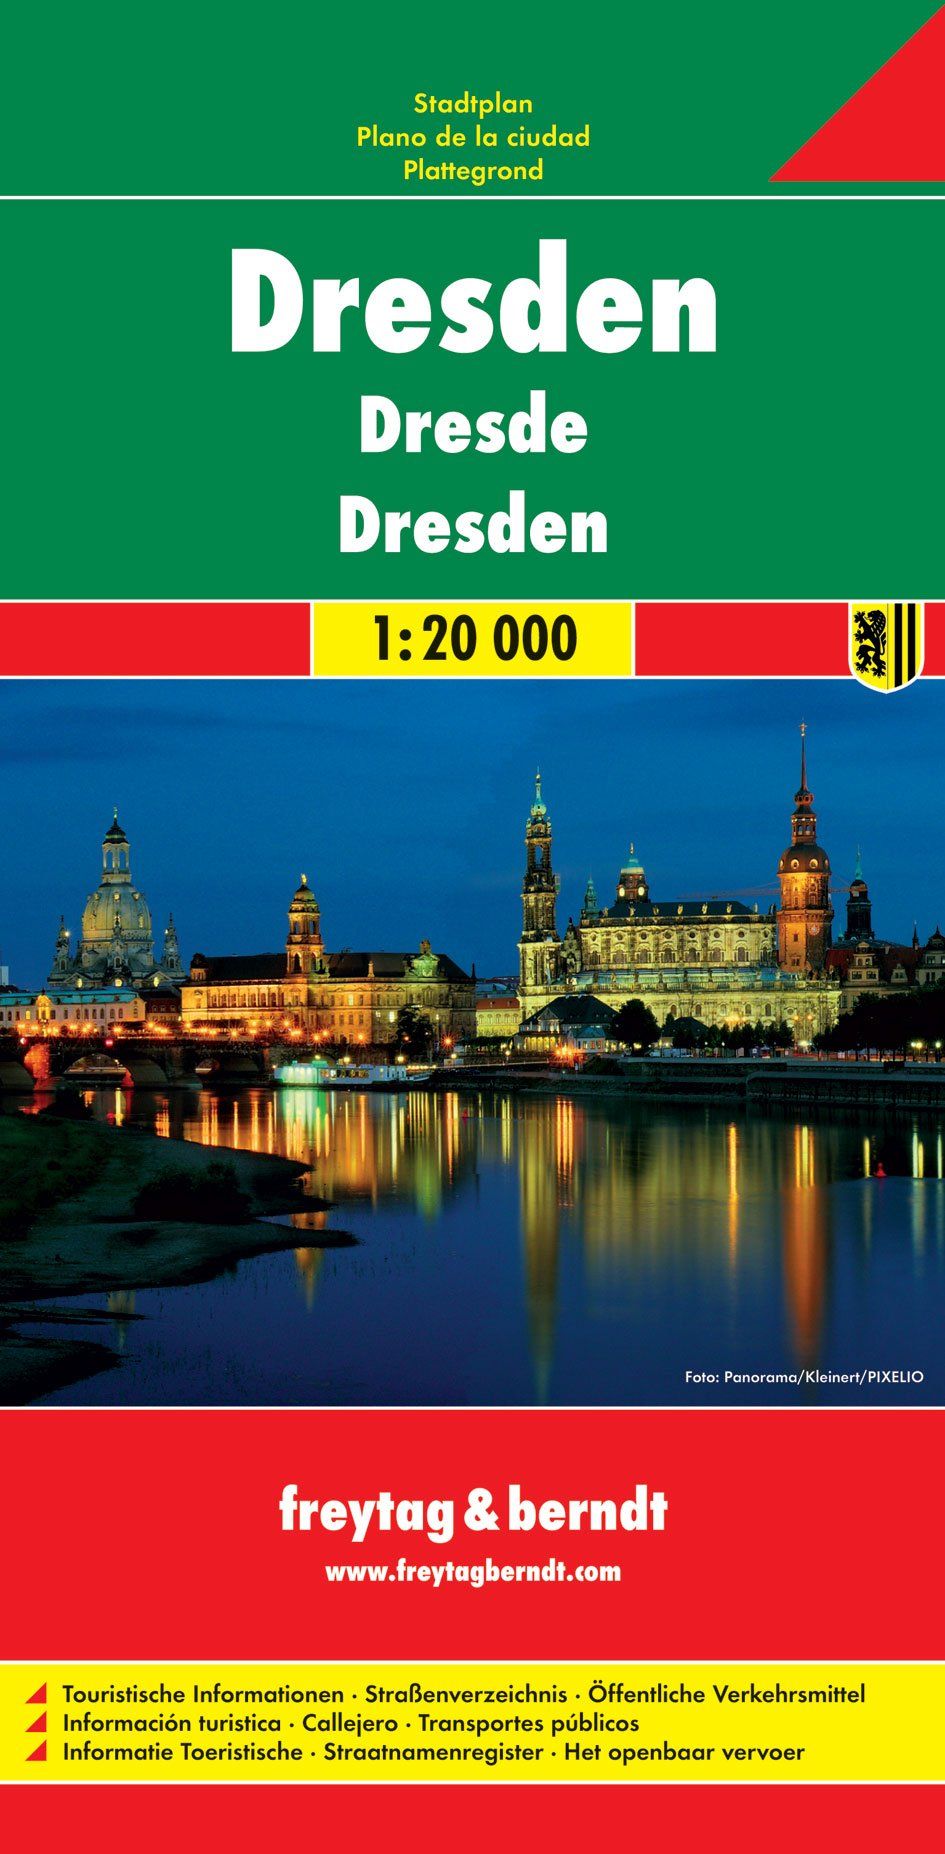 Plan détaillé - Dresde | Freytag & Berndt carte pliée Freytag & Berndt 